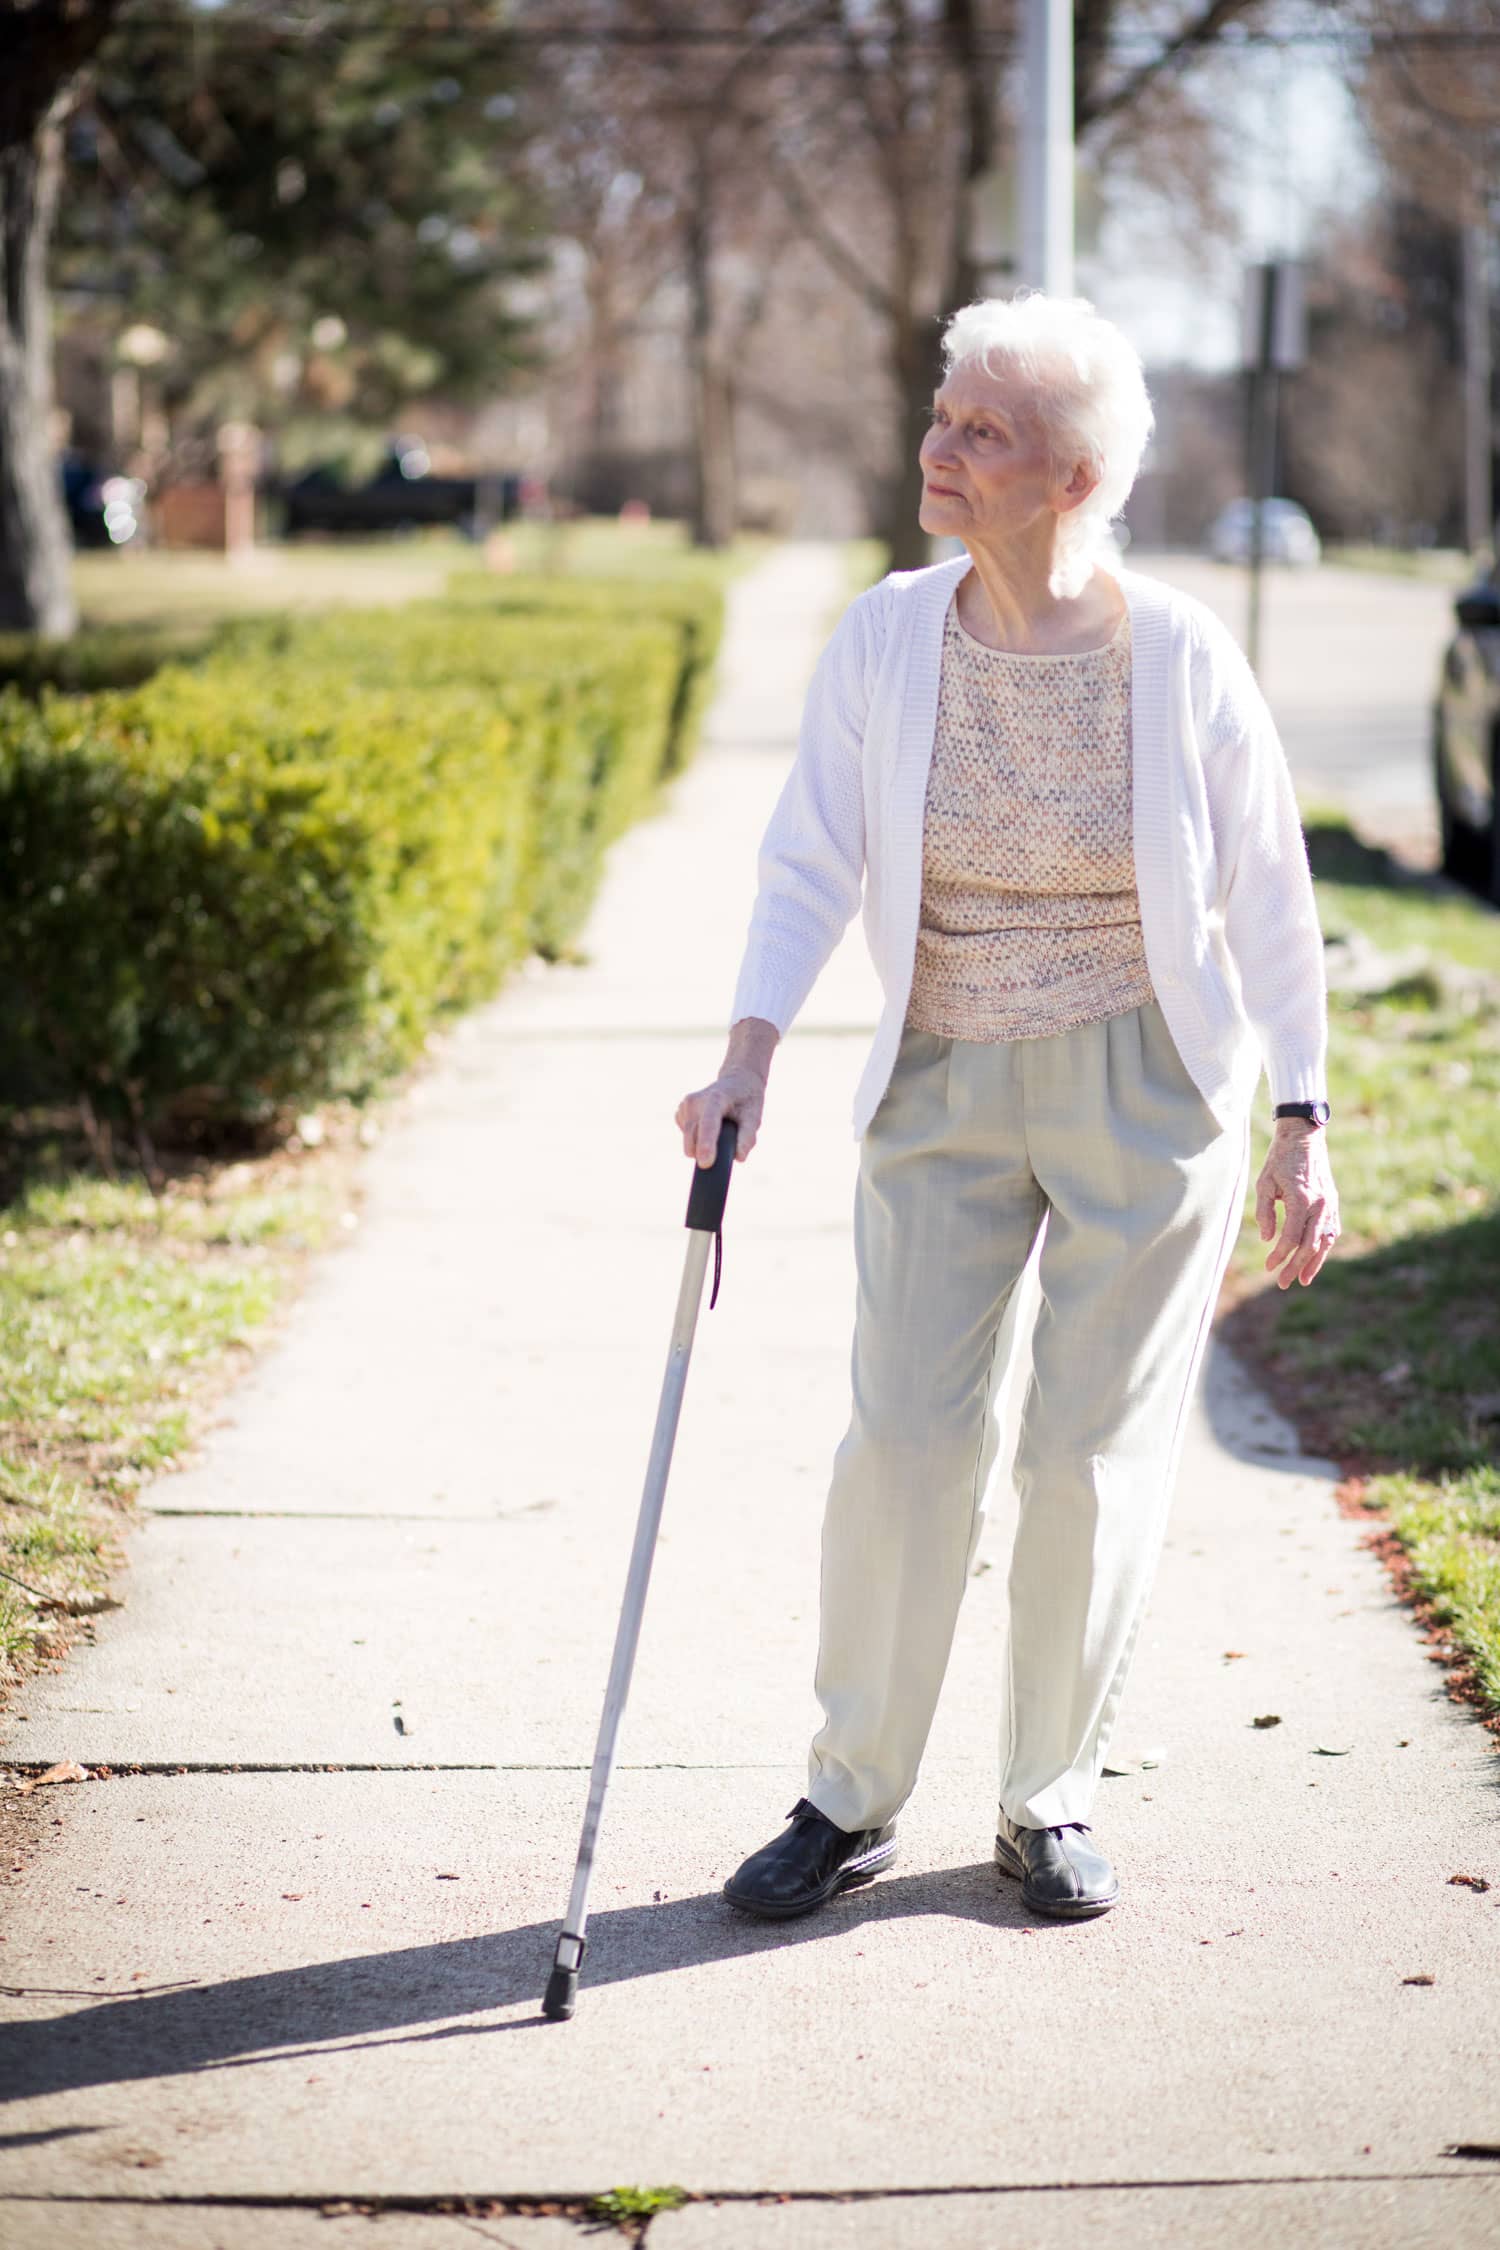 Senior woman taking a walk to reduce stress